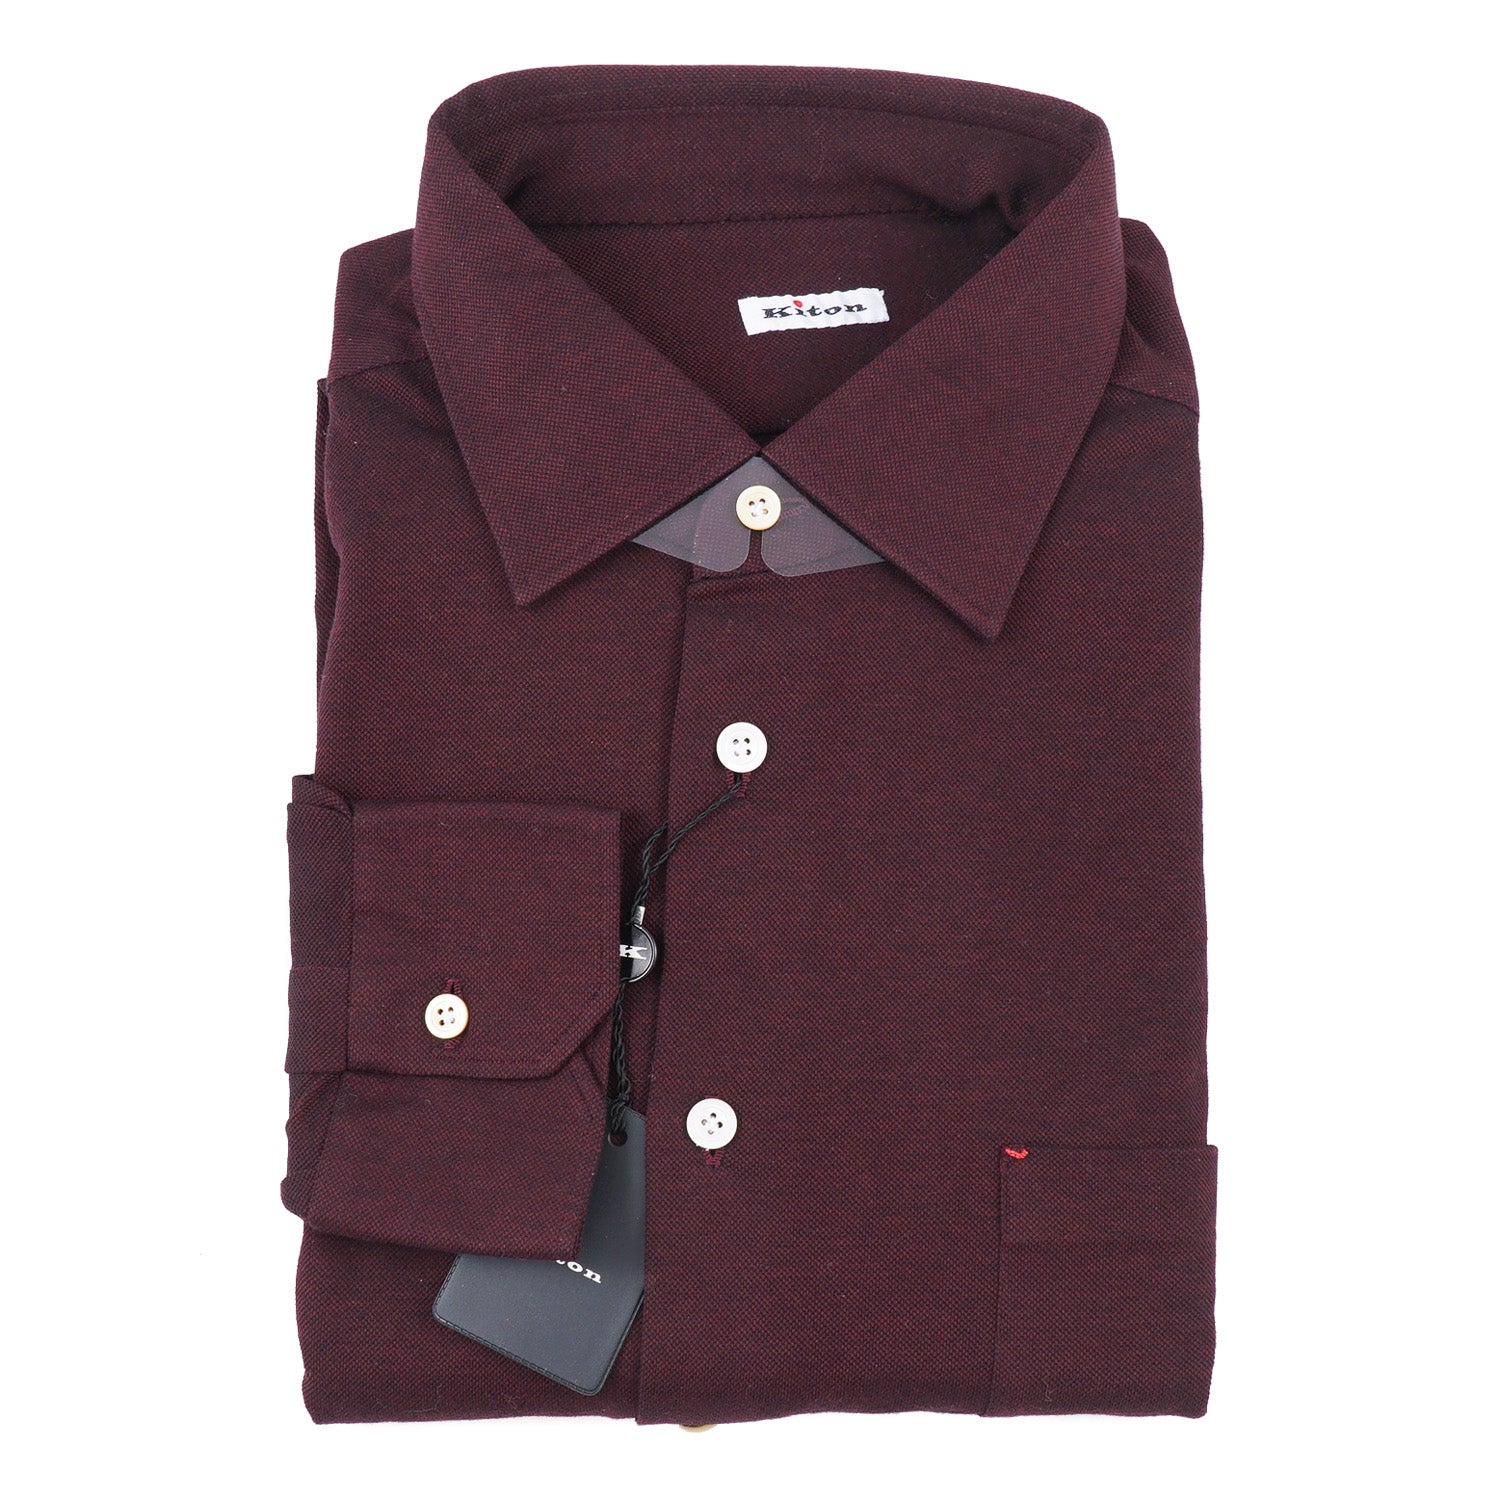 Kiton Pique Knit Jersey Cotton Shirt - Top Shelf Apparel